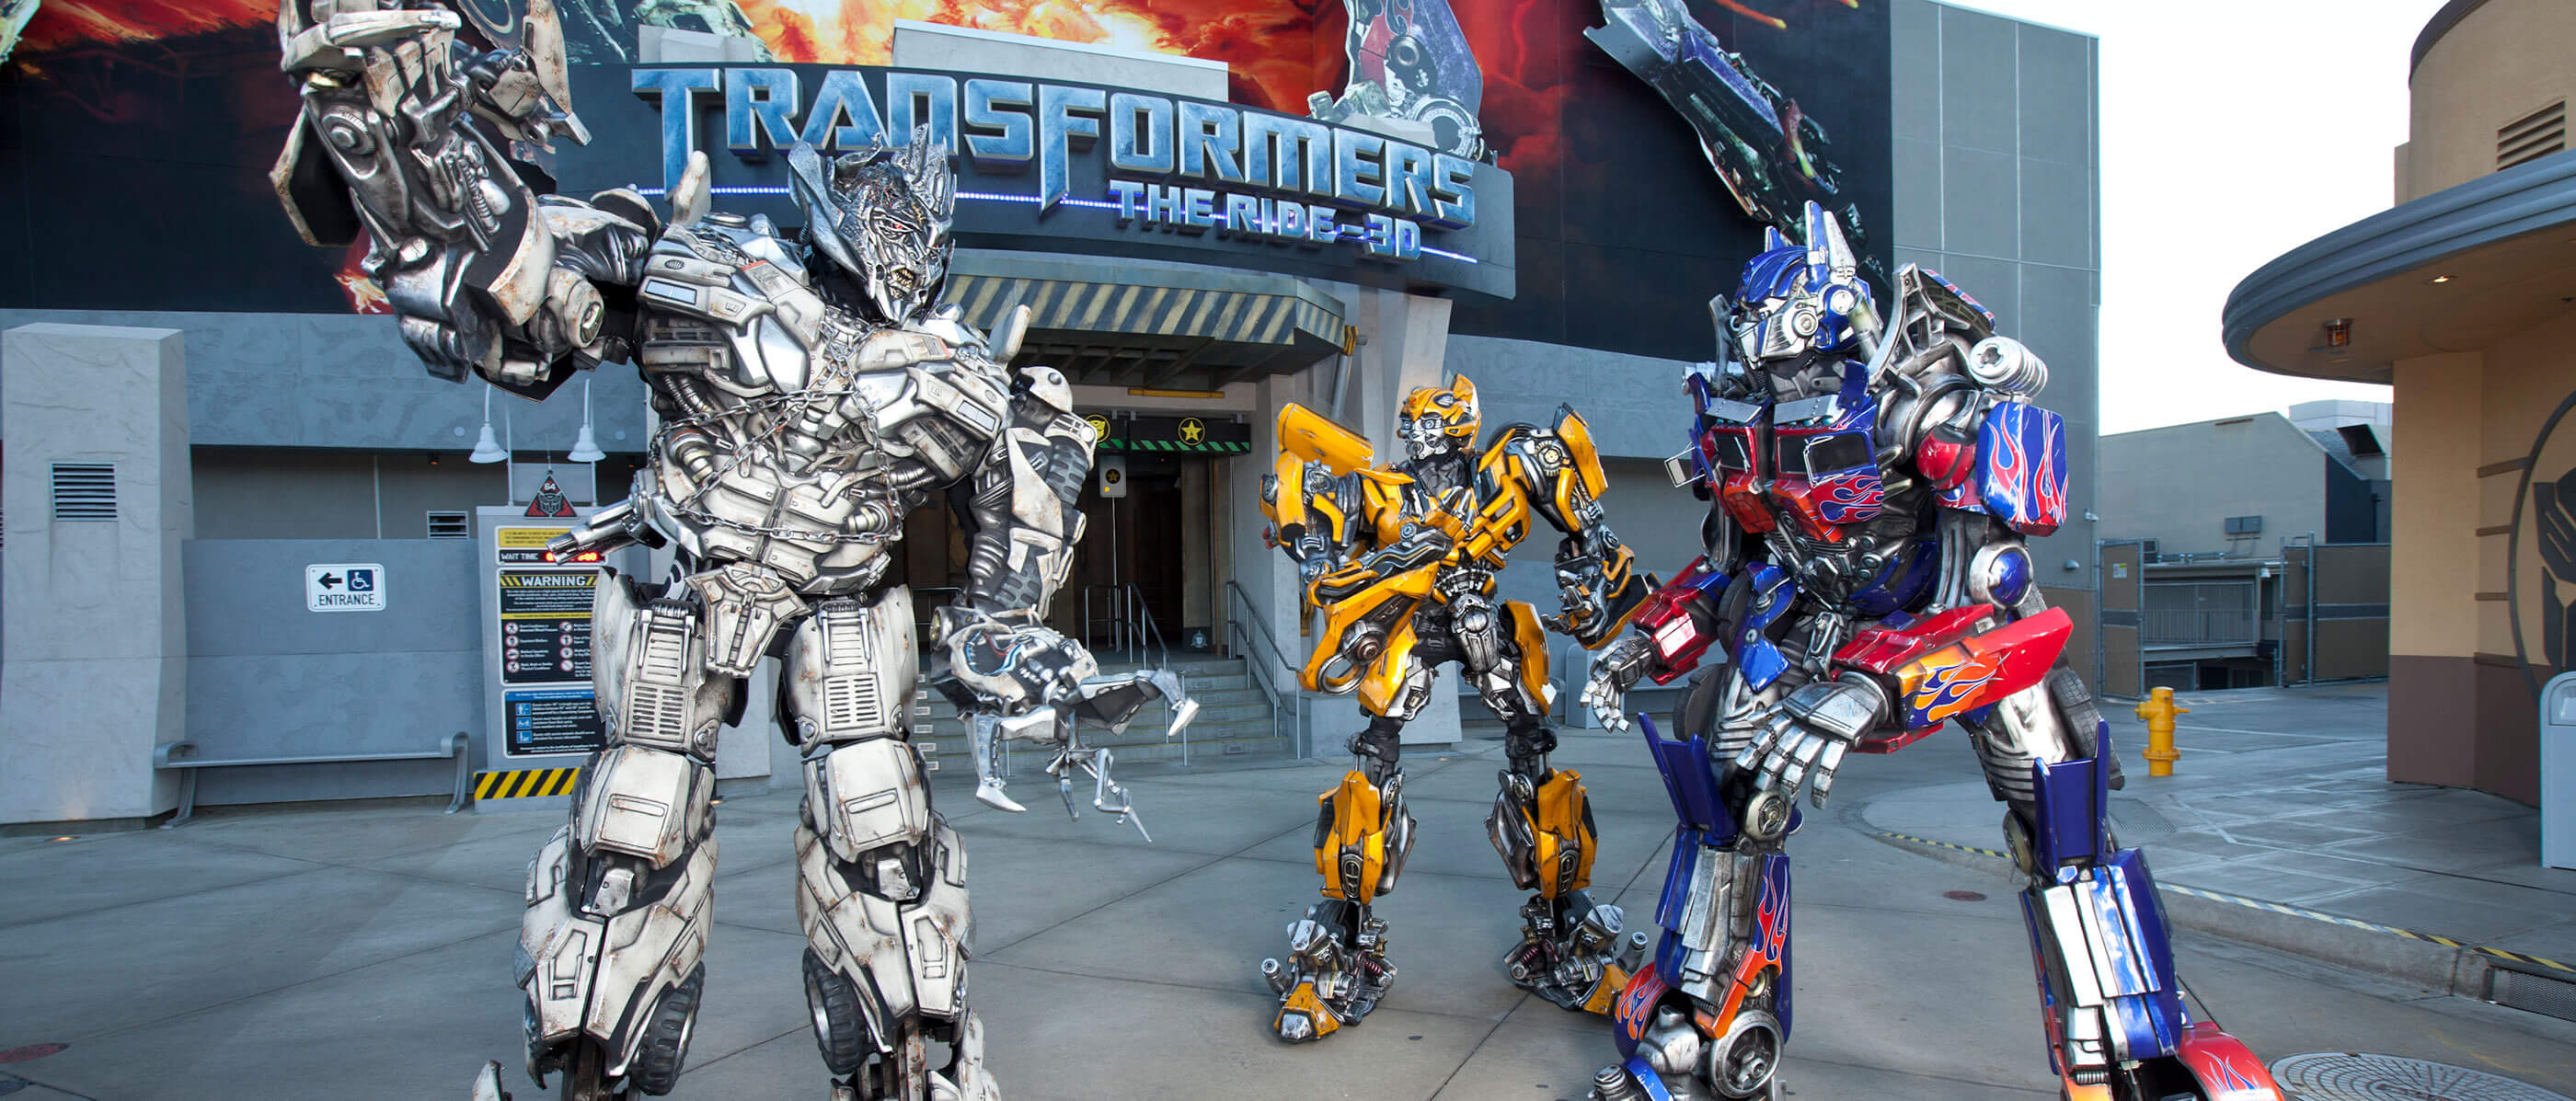 transformers ride universal studios hollywood